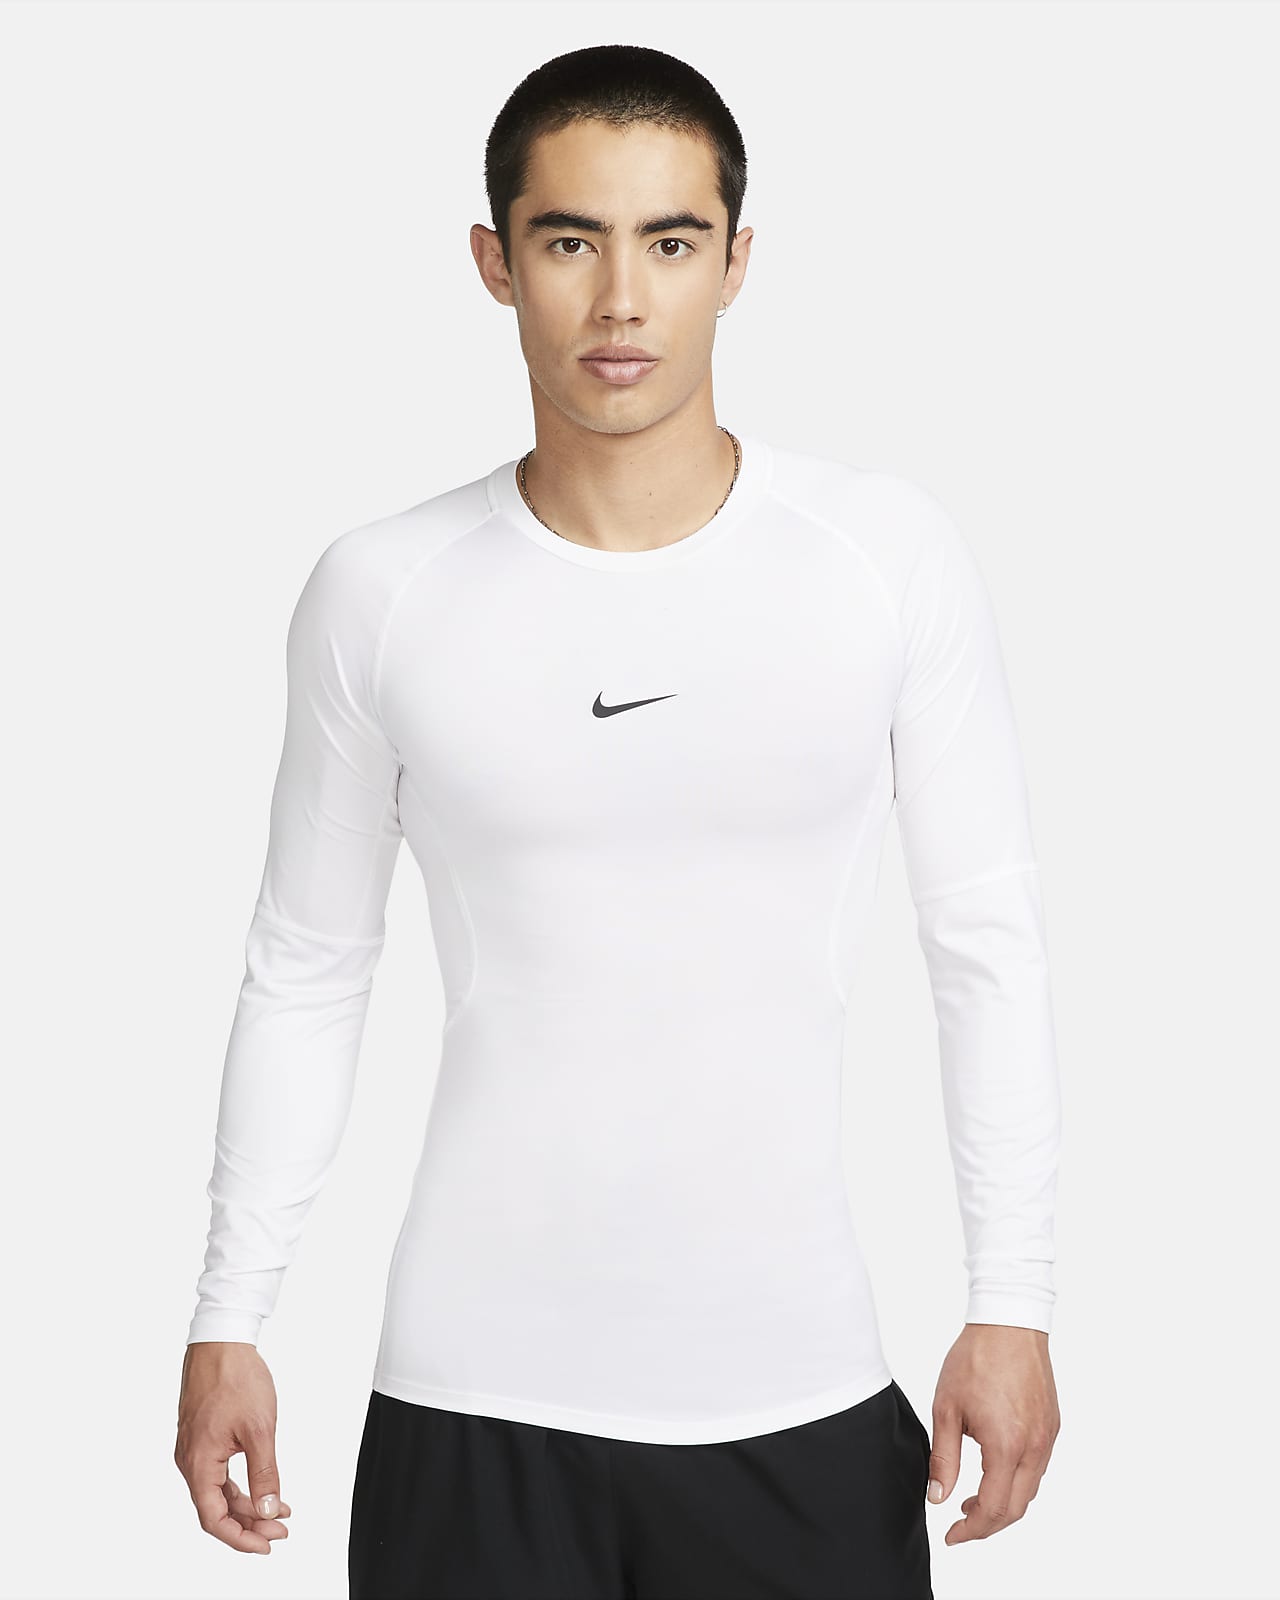 Nike Pro 男款 Dri-FIT 緊身長袖健身上衣